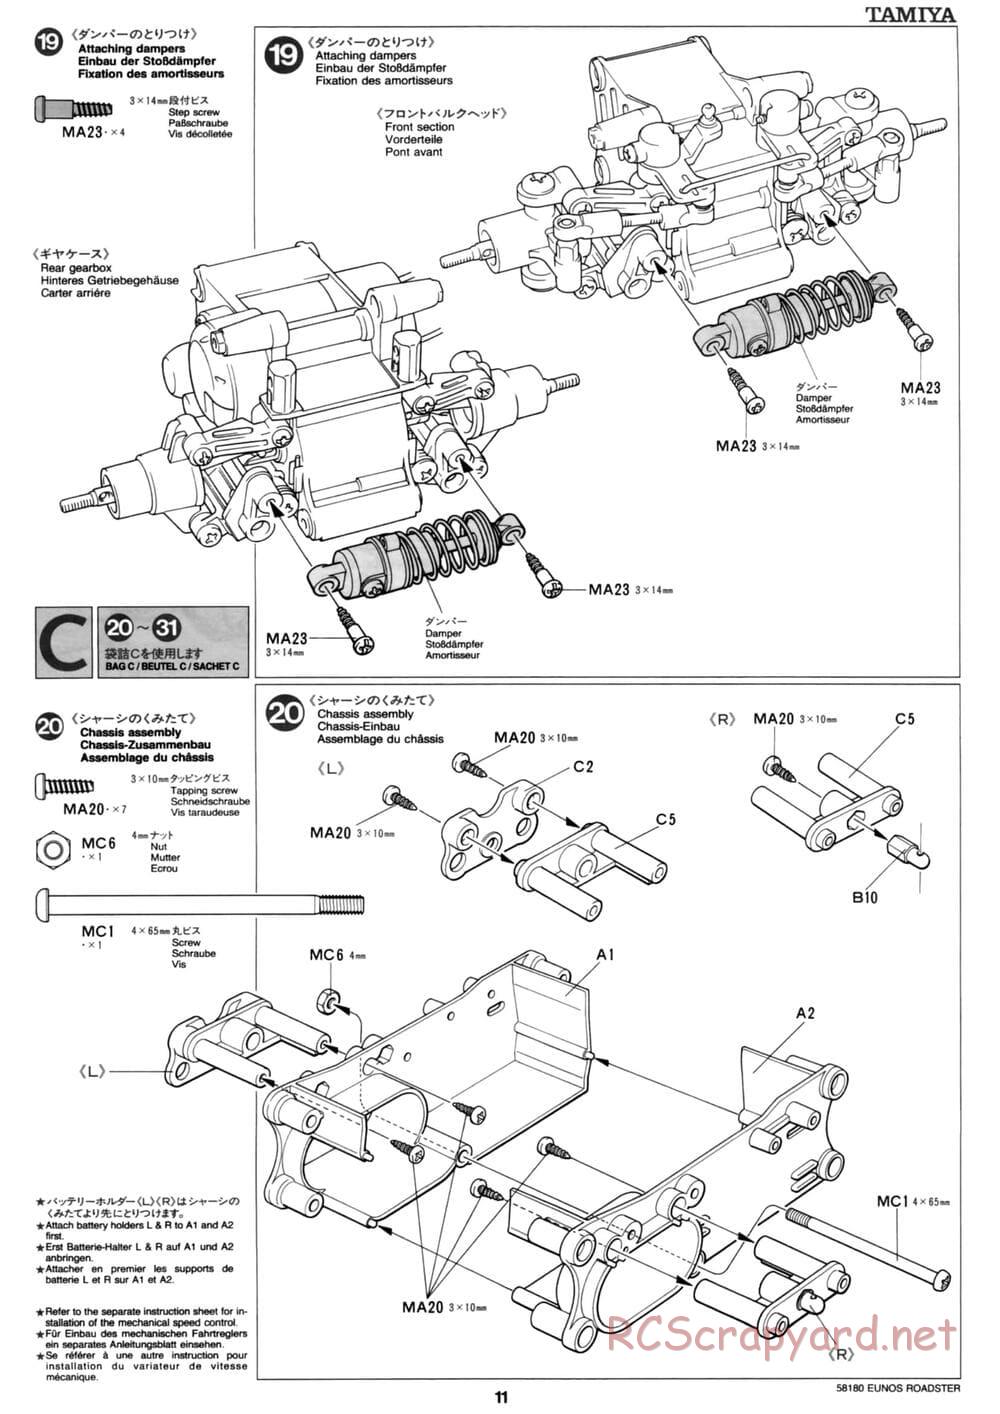 Tamiya - Eunos Roadster - M02M Chassis - Manual - Page 11